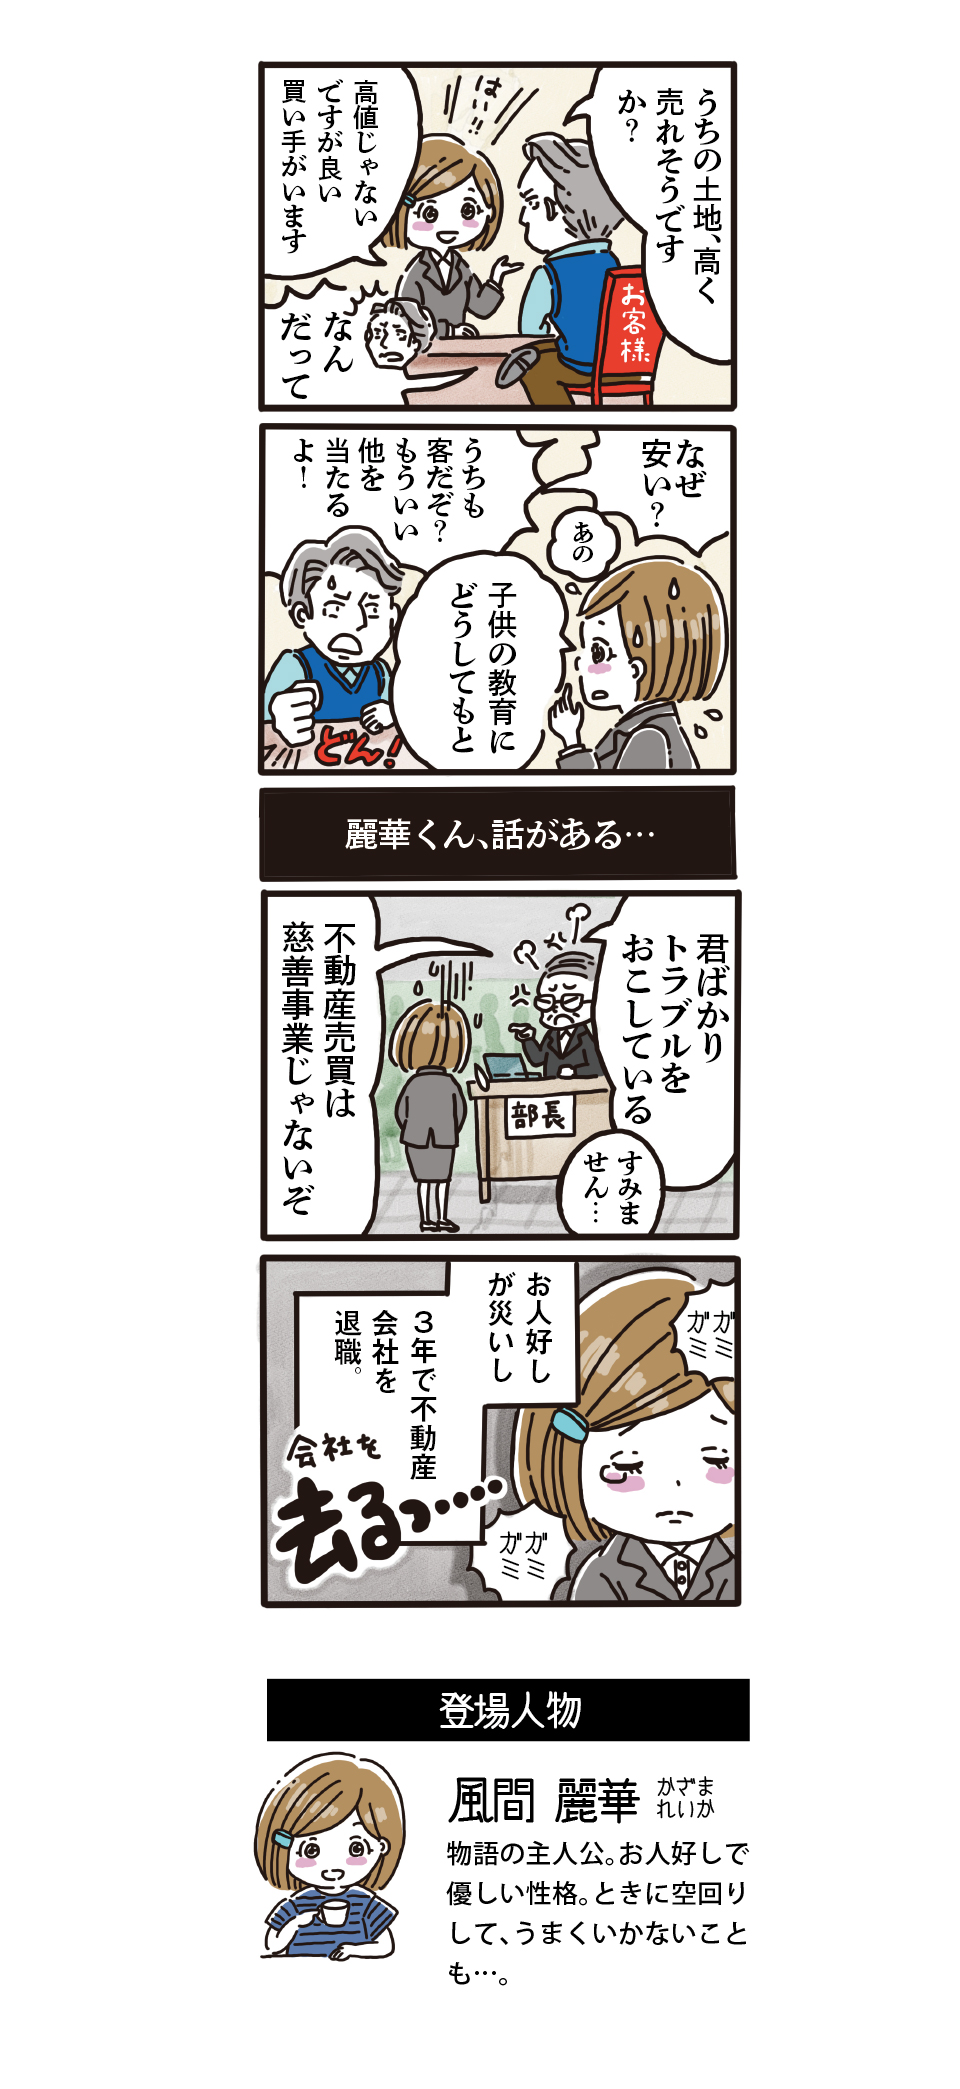 【web漫画】華麗なるSOUZOKU  #2